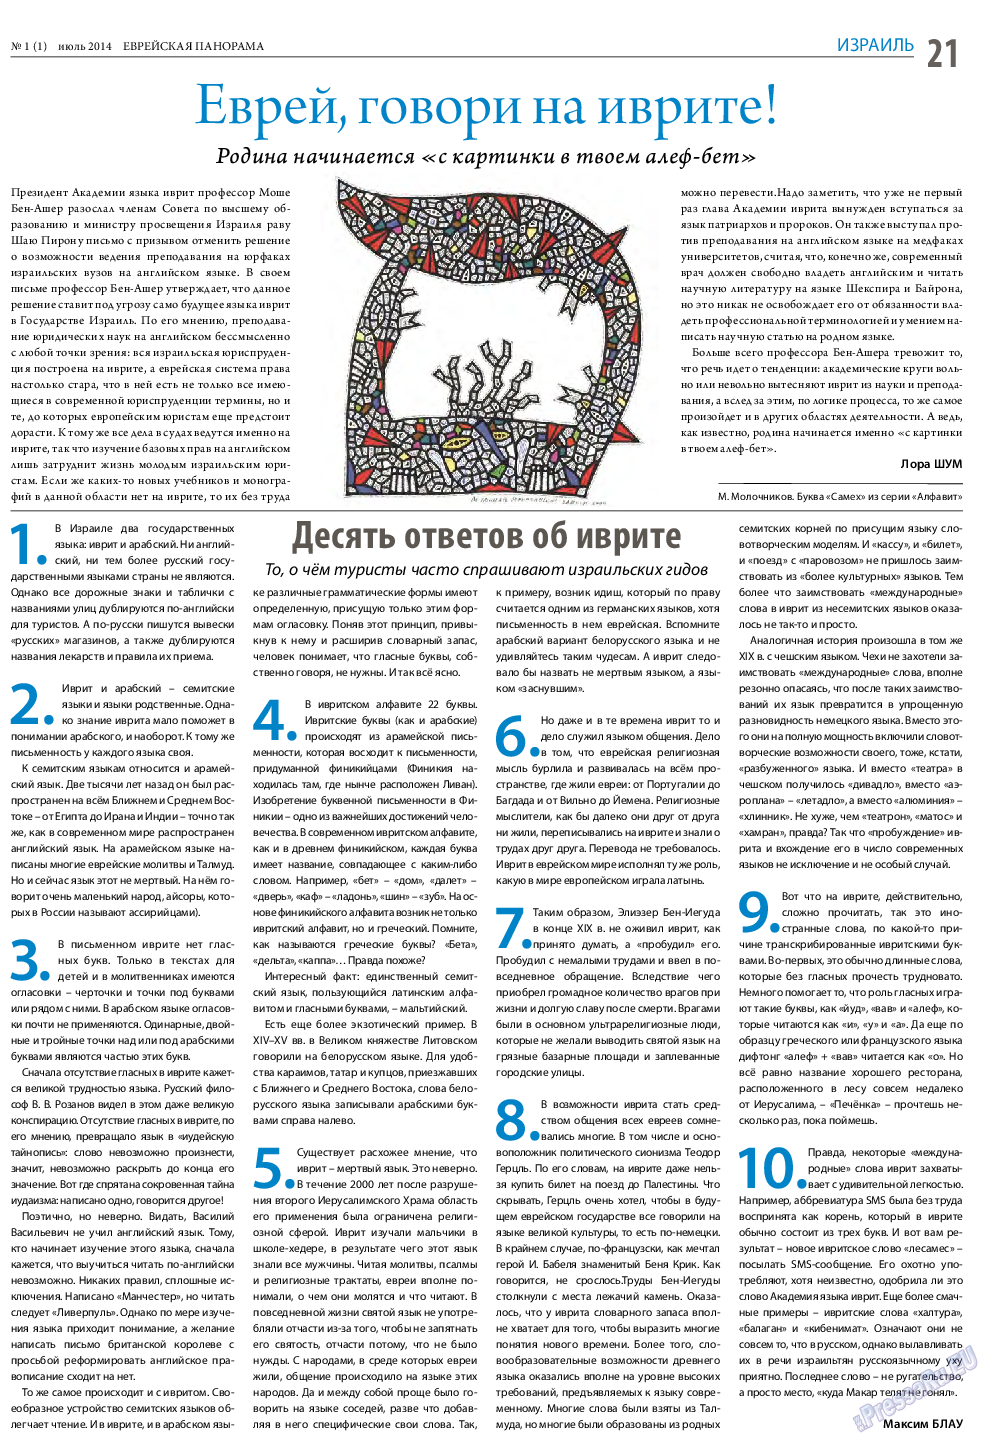 Еврейская панорама, газета. 2014 №1 стр.21